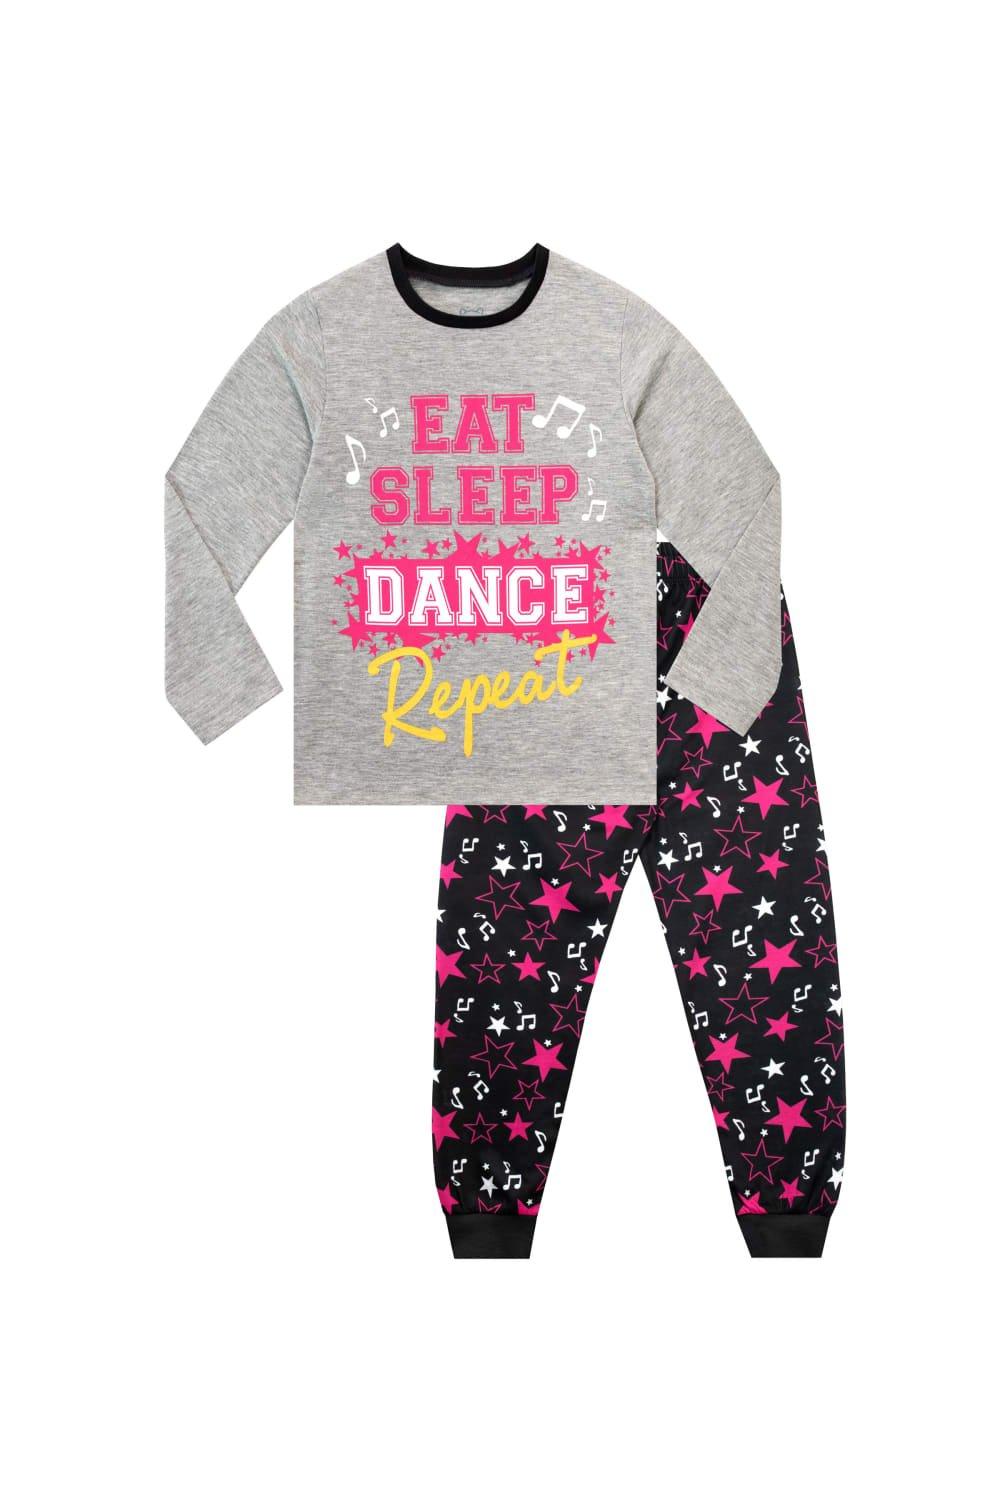 Eat Sleep Dance Repeat Pyjamas